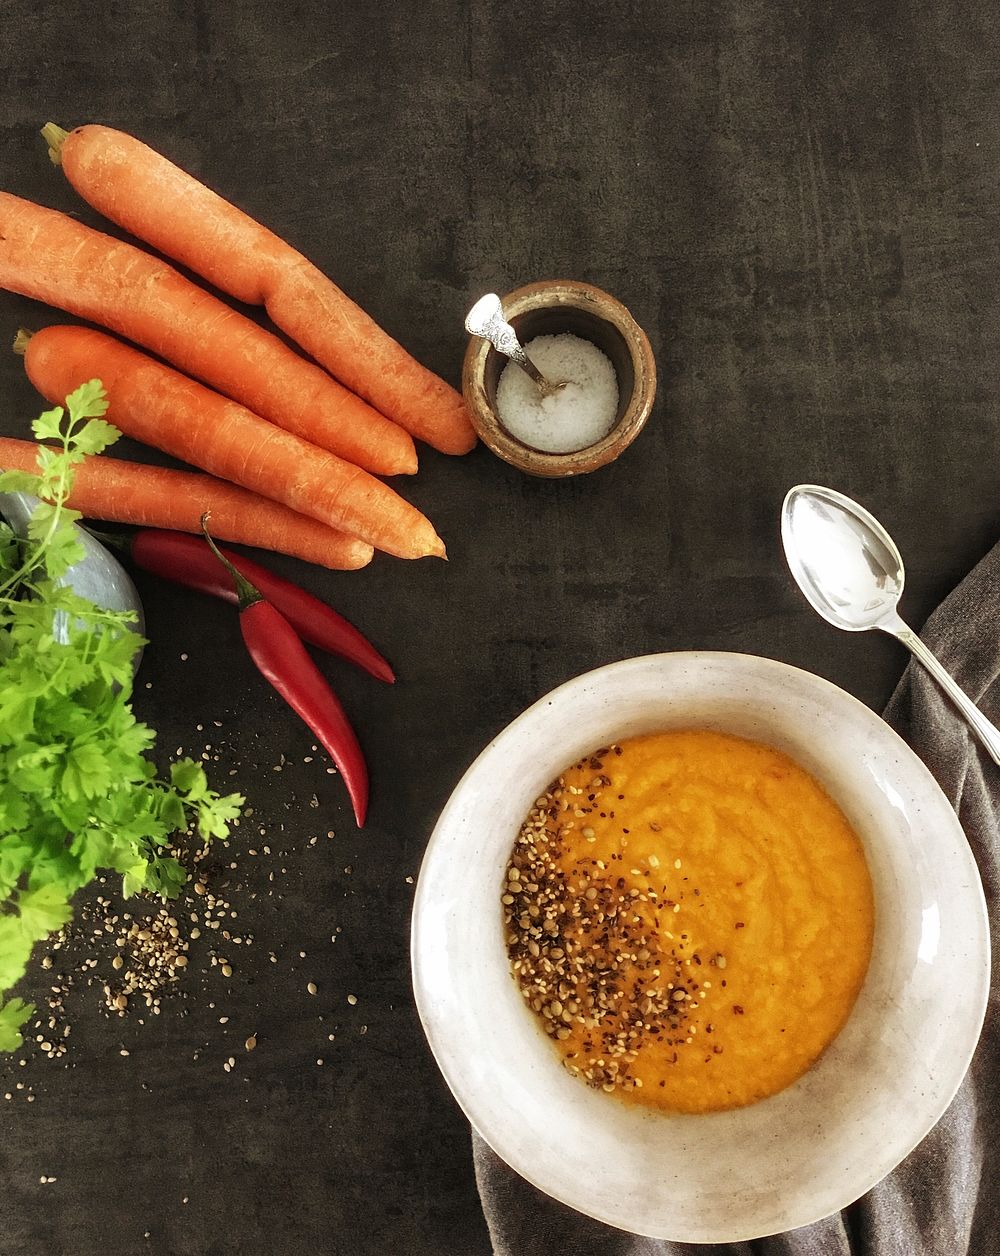 Free carrot soup image, public domain food CC0 photo.